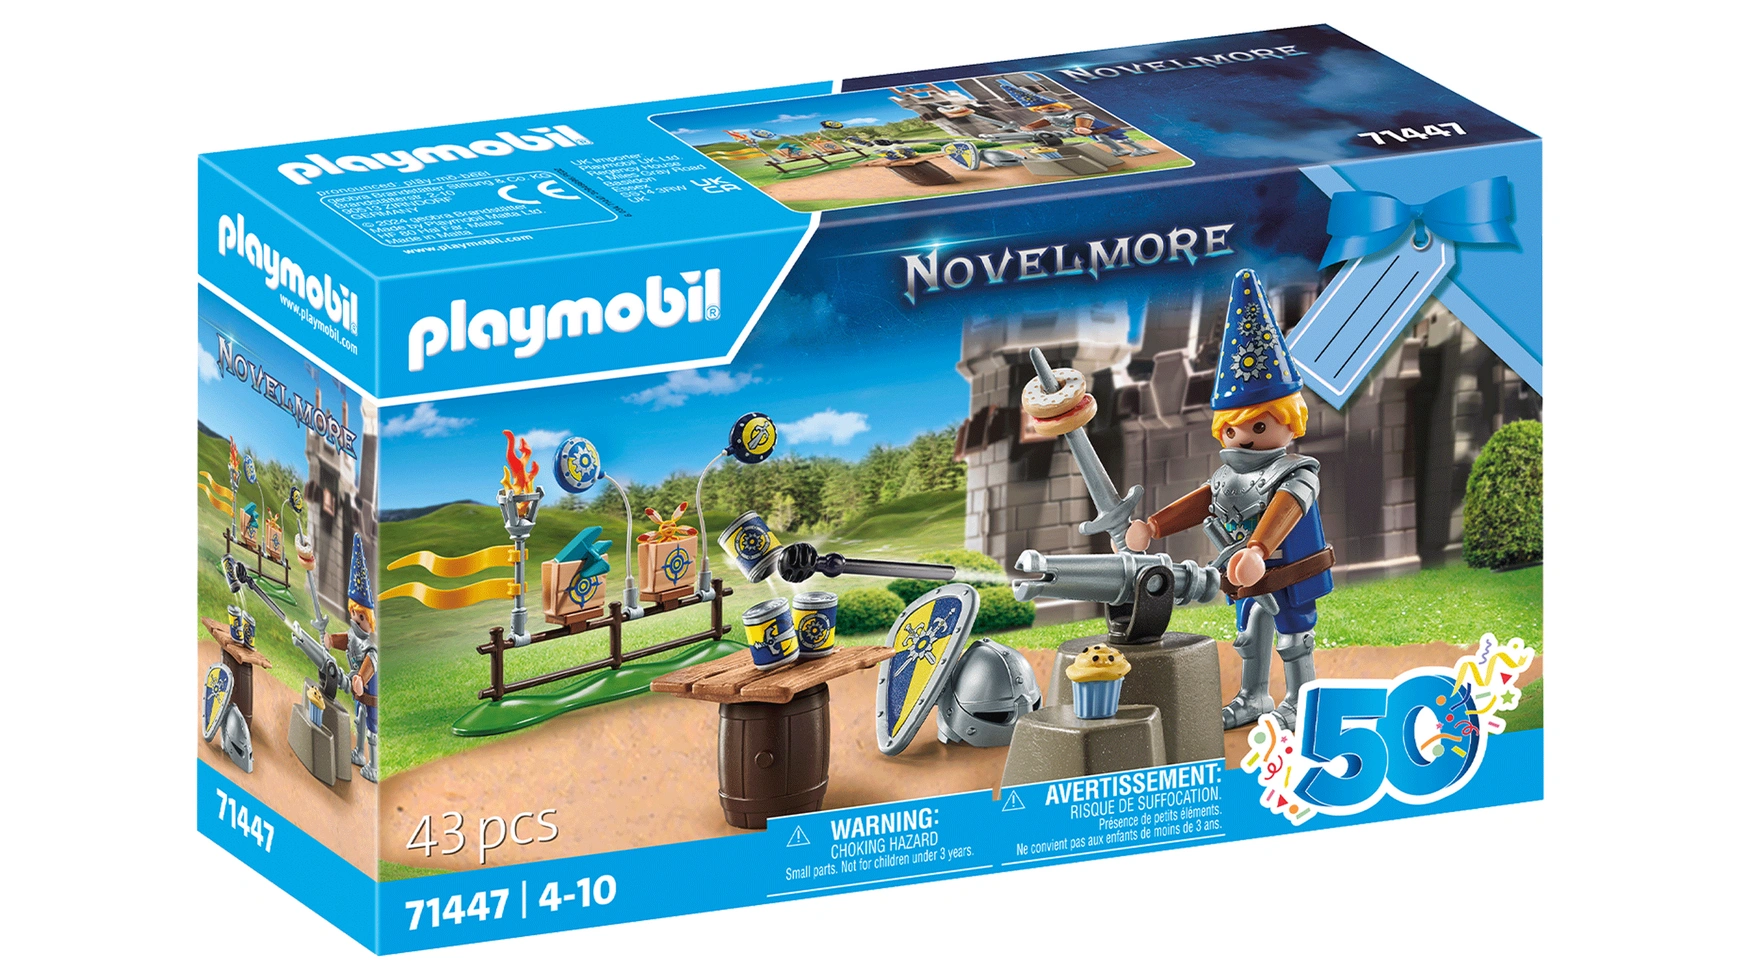 рыцари юбилейный рыцарь playmobil Novelmore день рождения рыцаря Playmobil